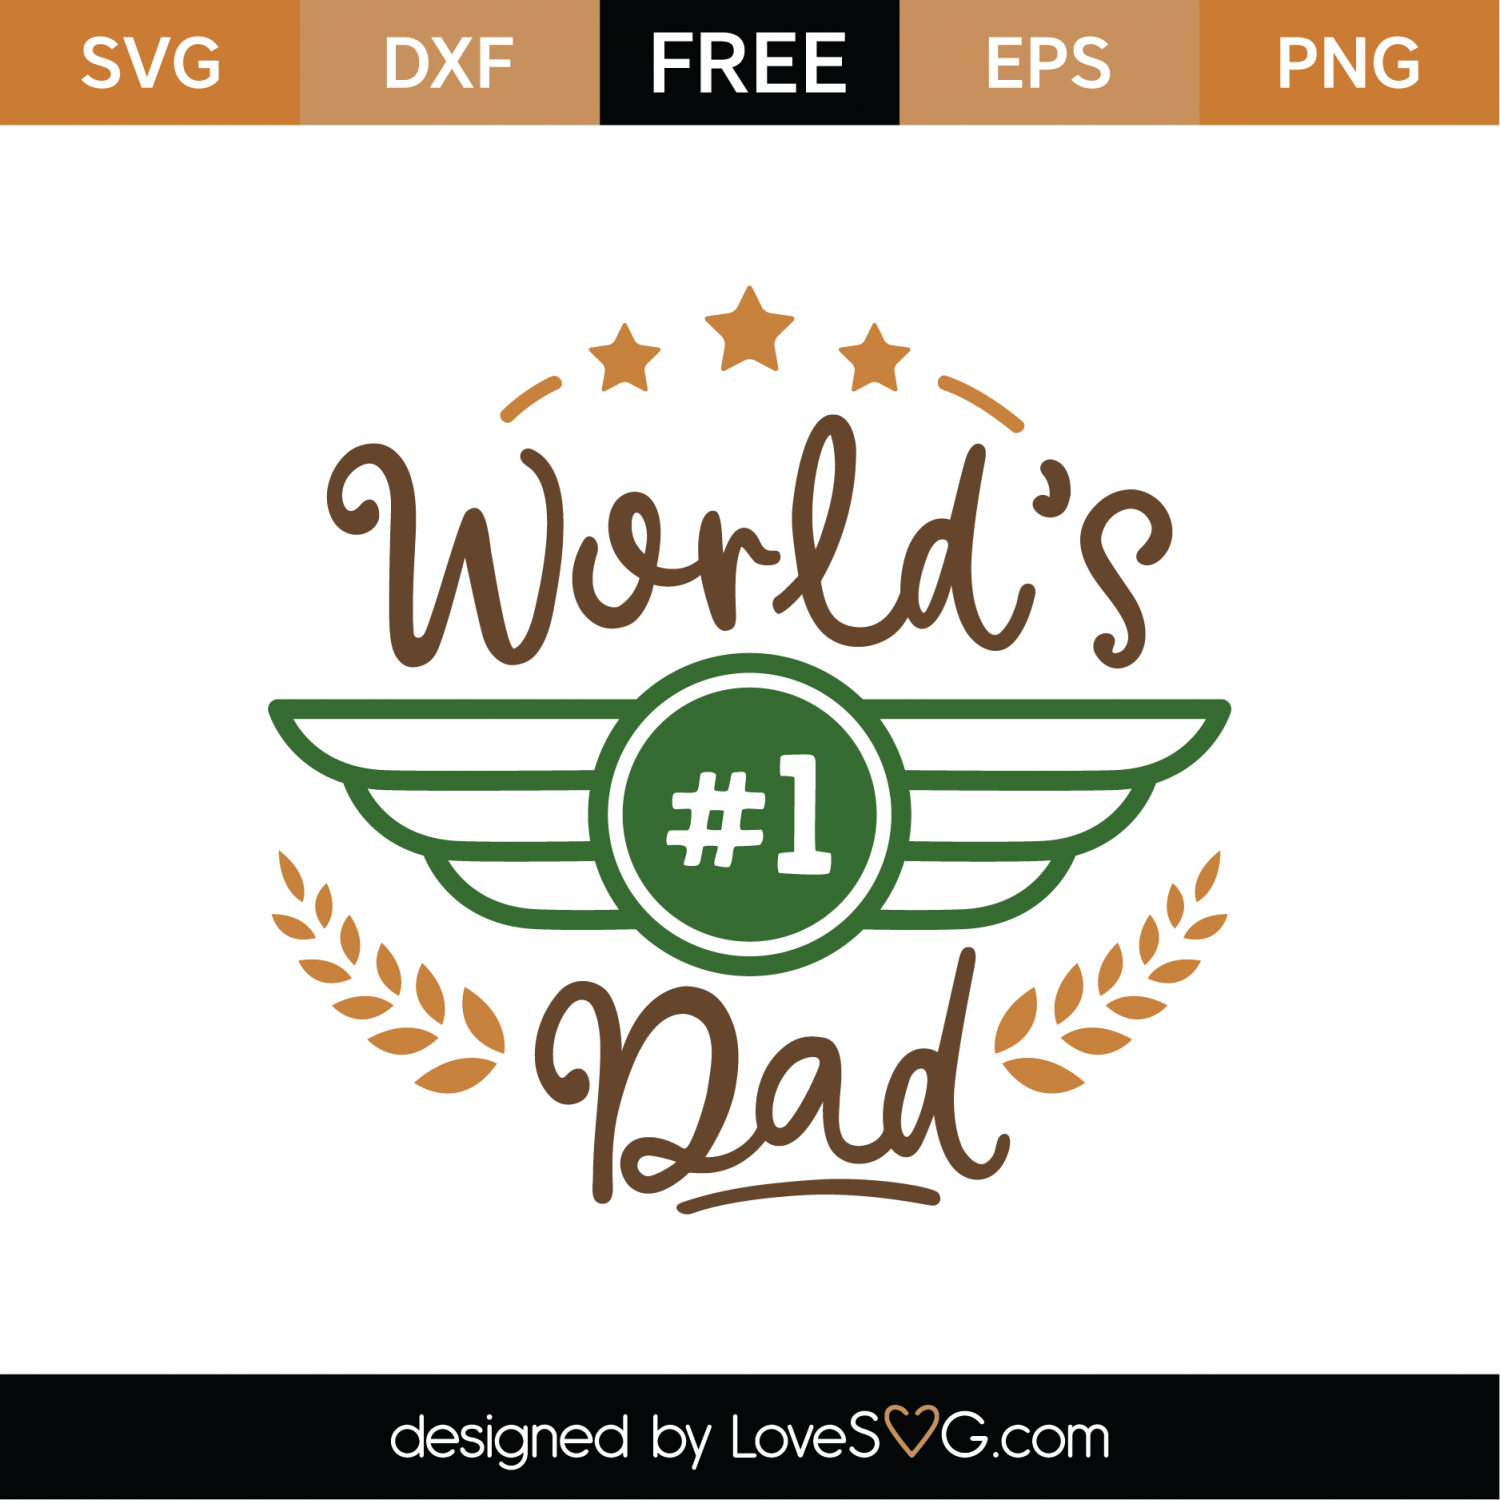 Free World's #1 Dad SVG Cut File | Lovesvg.com